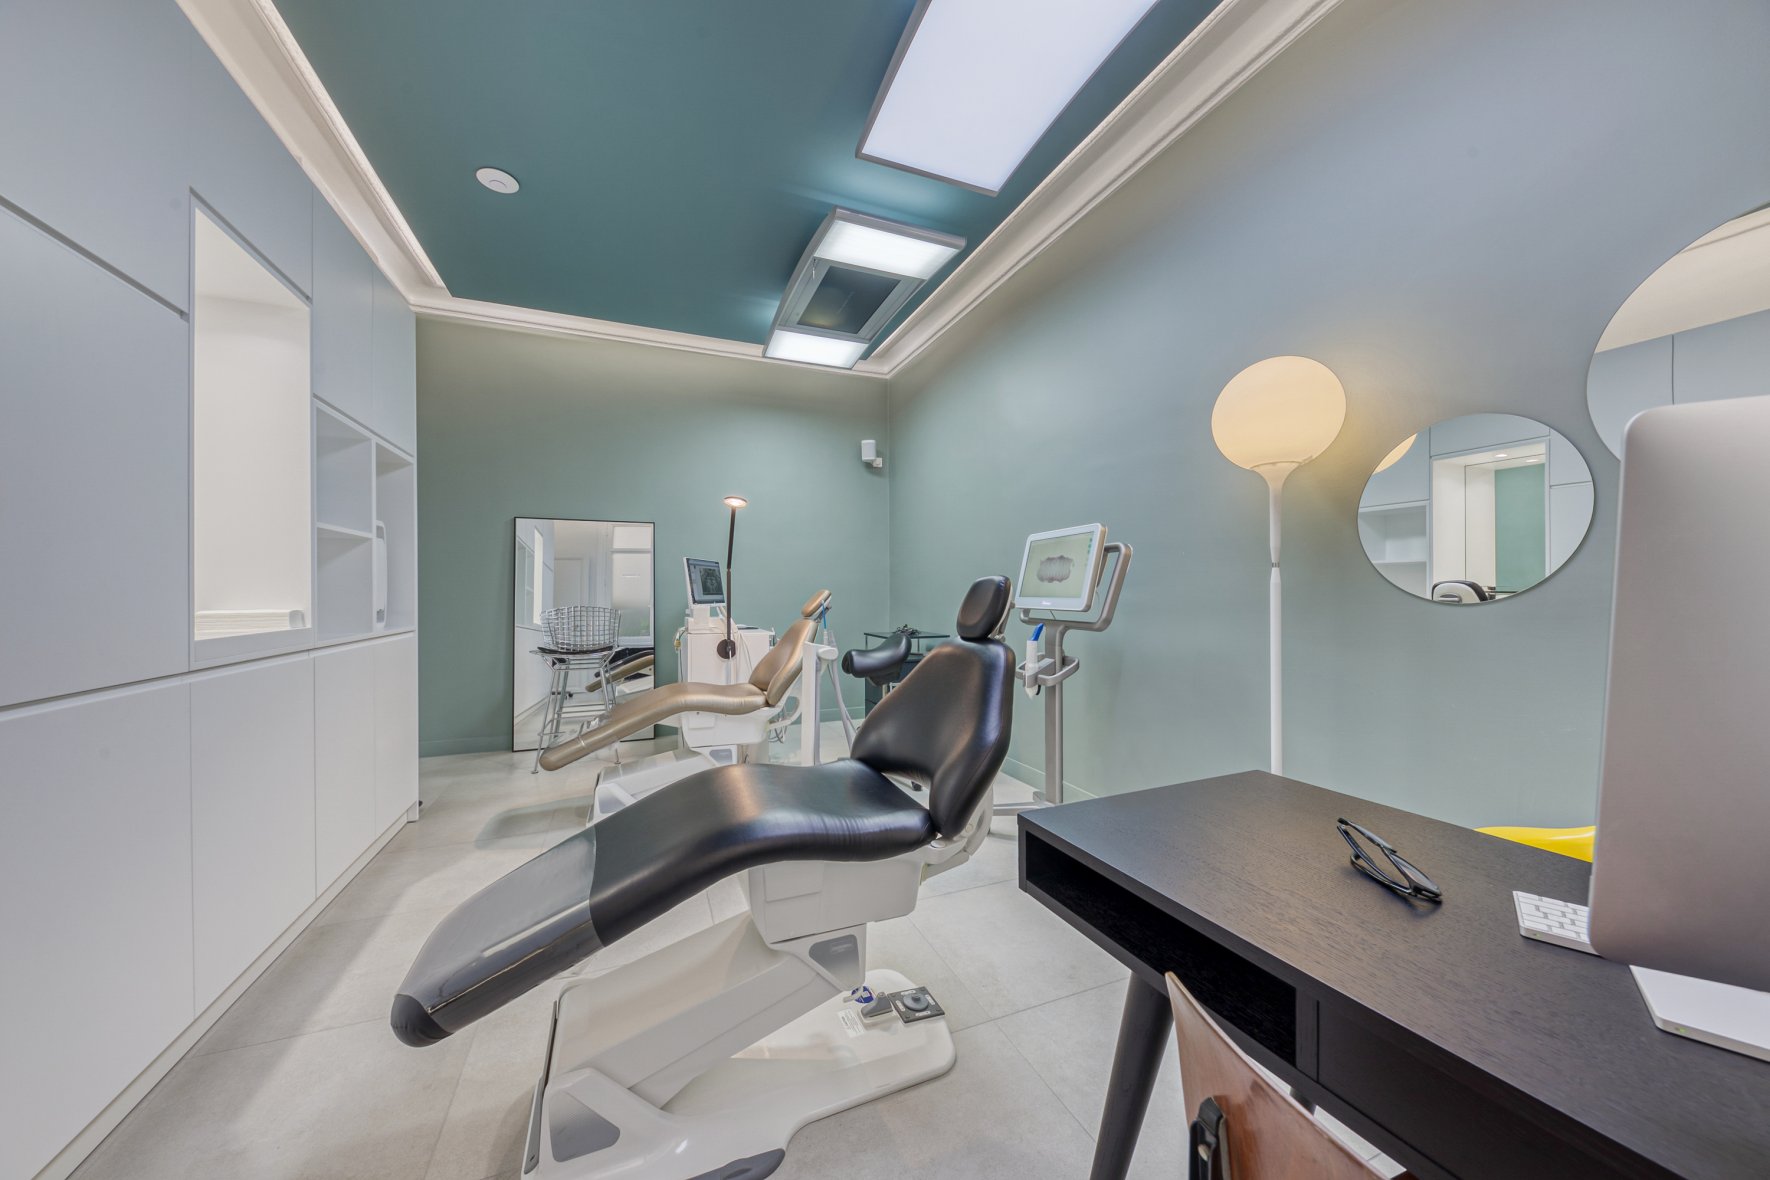 Cabinet d'orthodontie Paris 17